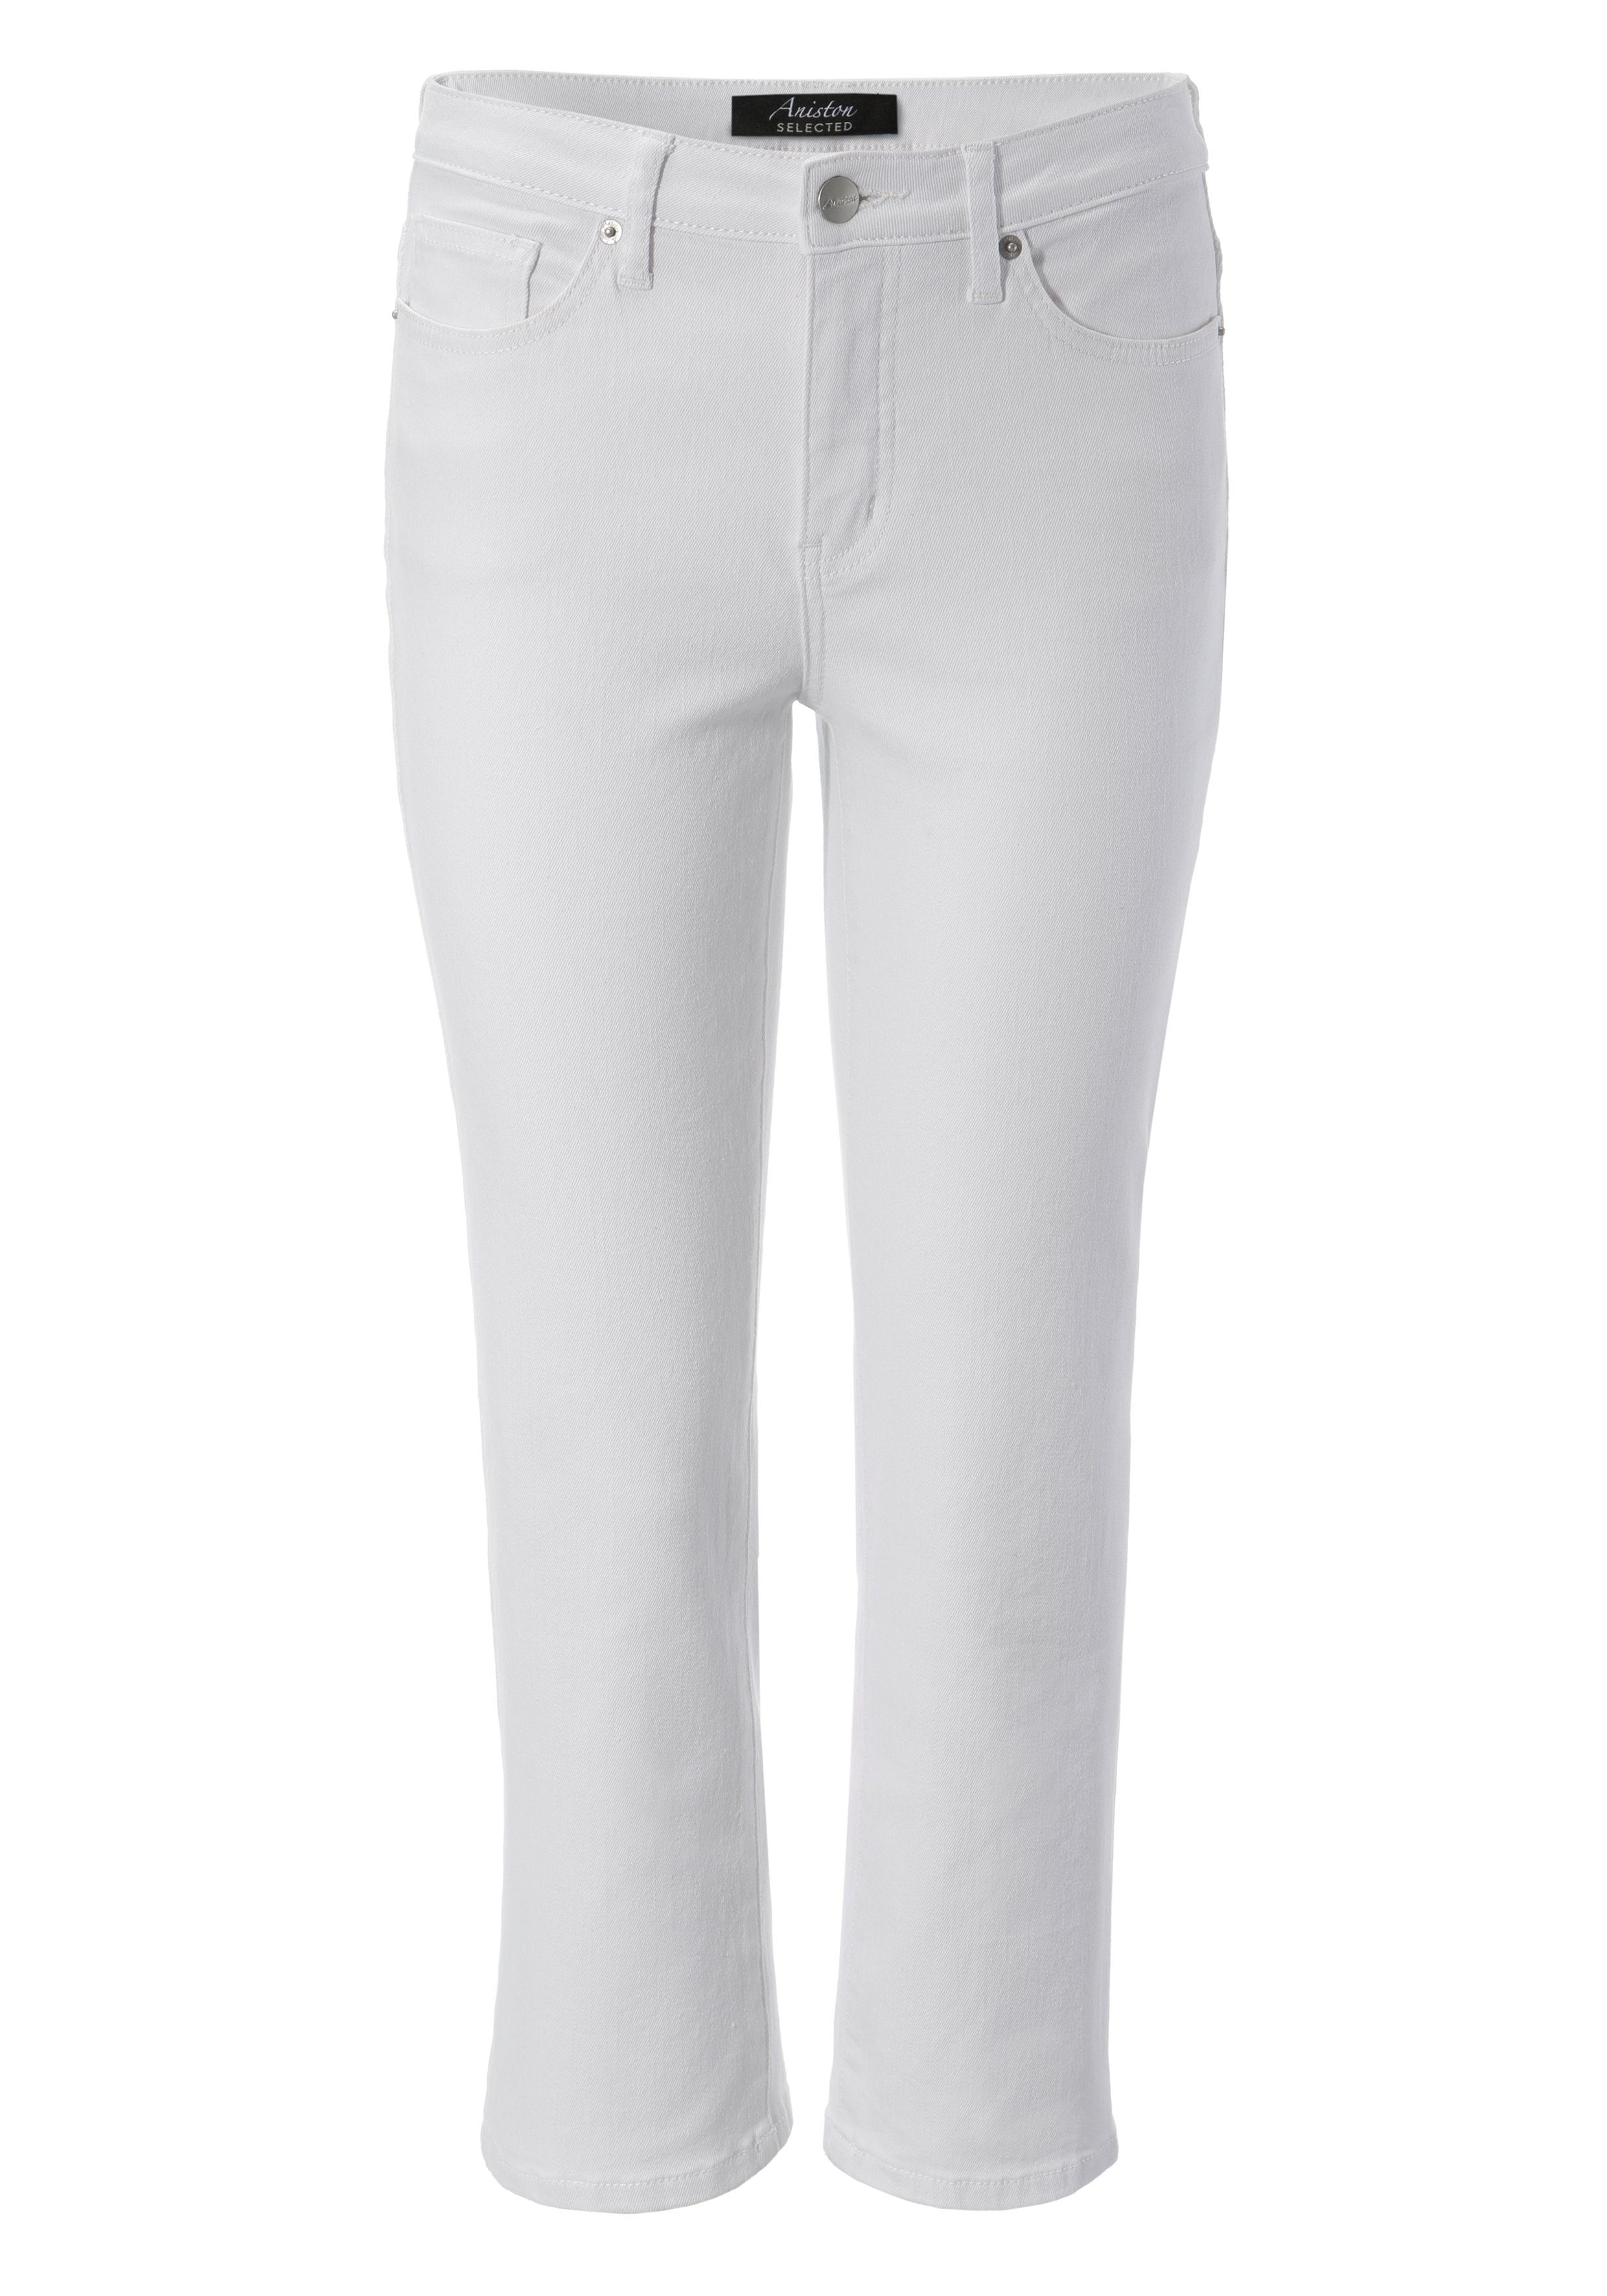 Aniston SELECTED Straight-Jeans verkürzter Länge in weiß cropped